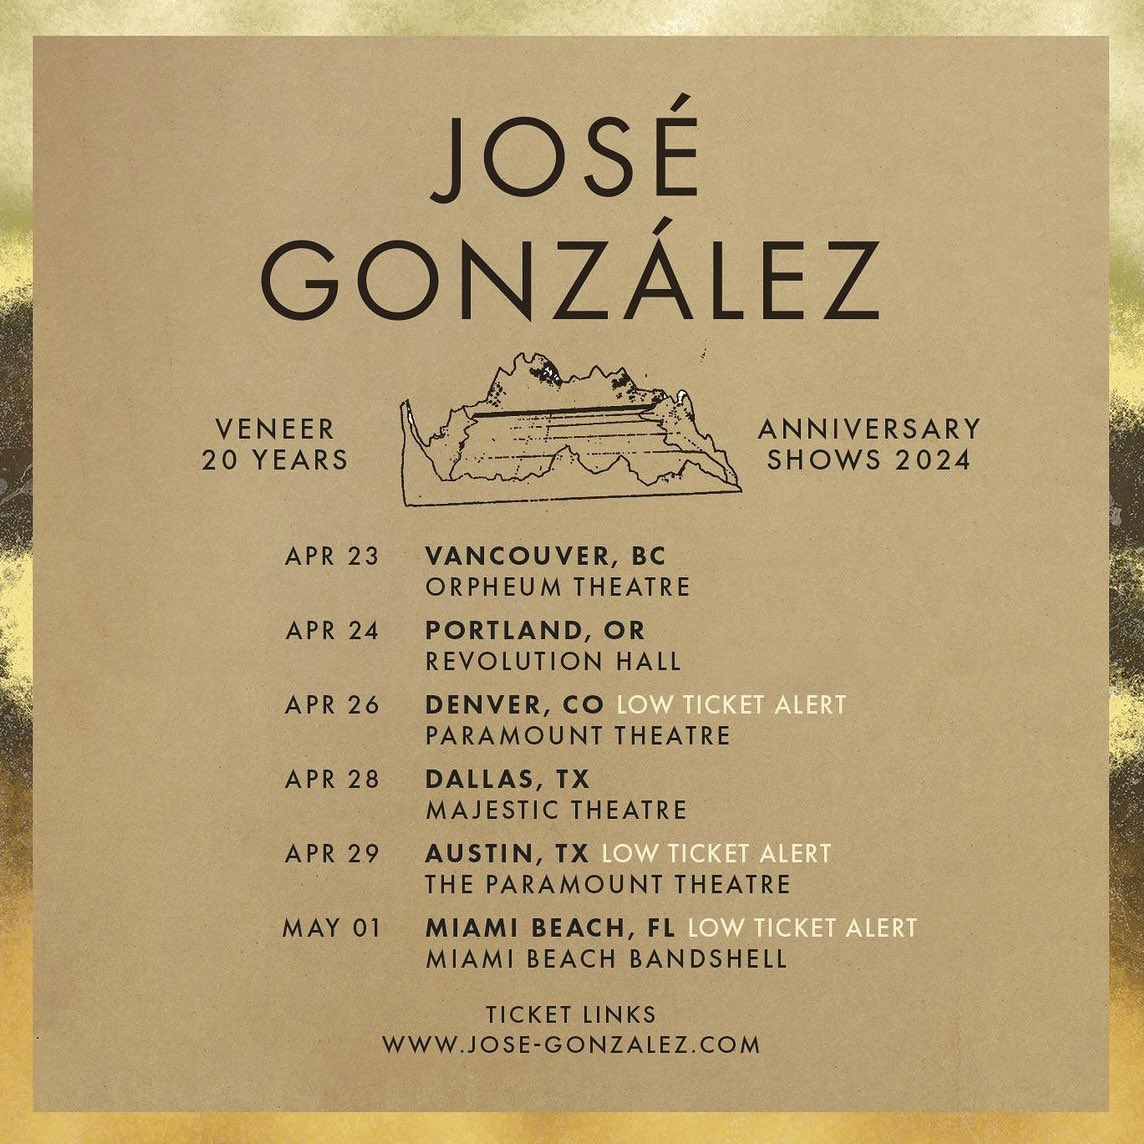 Next week, @_JoseGonzalez_ embarks on a North American tour celebrating 20 years of his seminal album ‘Veneer’ — don’t miss it! Tickets and info: jose-gonzalez.com/tour-dates/